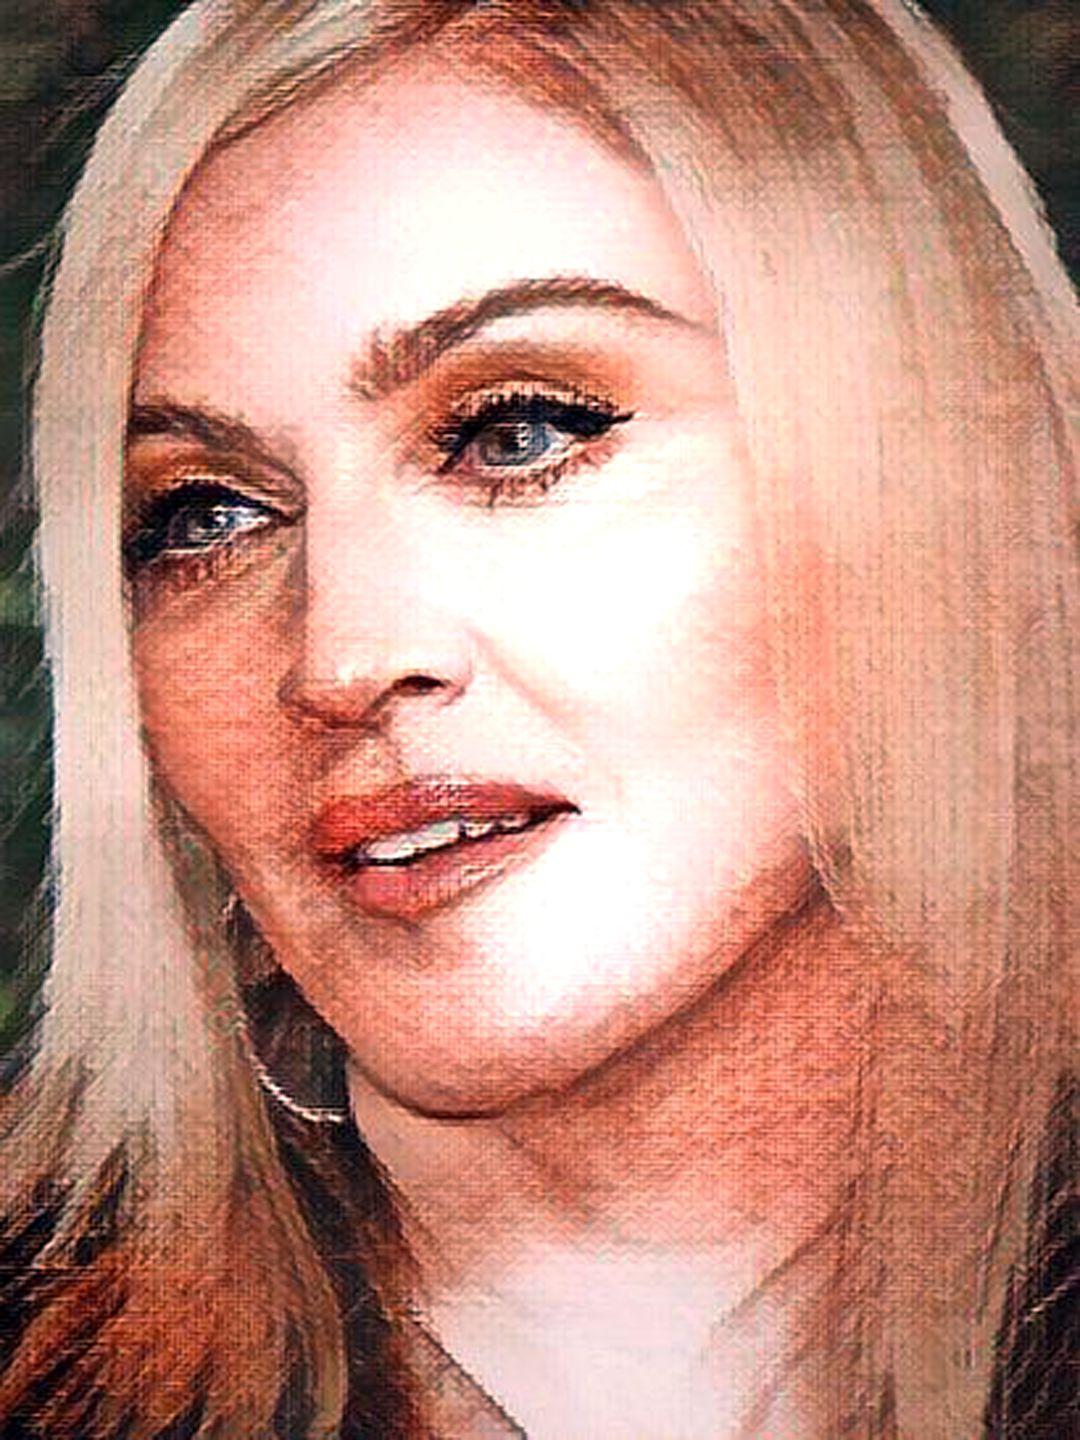 Amateur Nudism Naturism - Madonna # 36 - Celeb ART - Beautiful Artworks of Celebrities, Footballers,  Politicians and Famous People in World | OpenSea